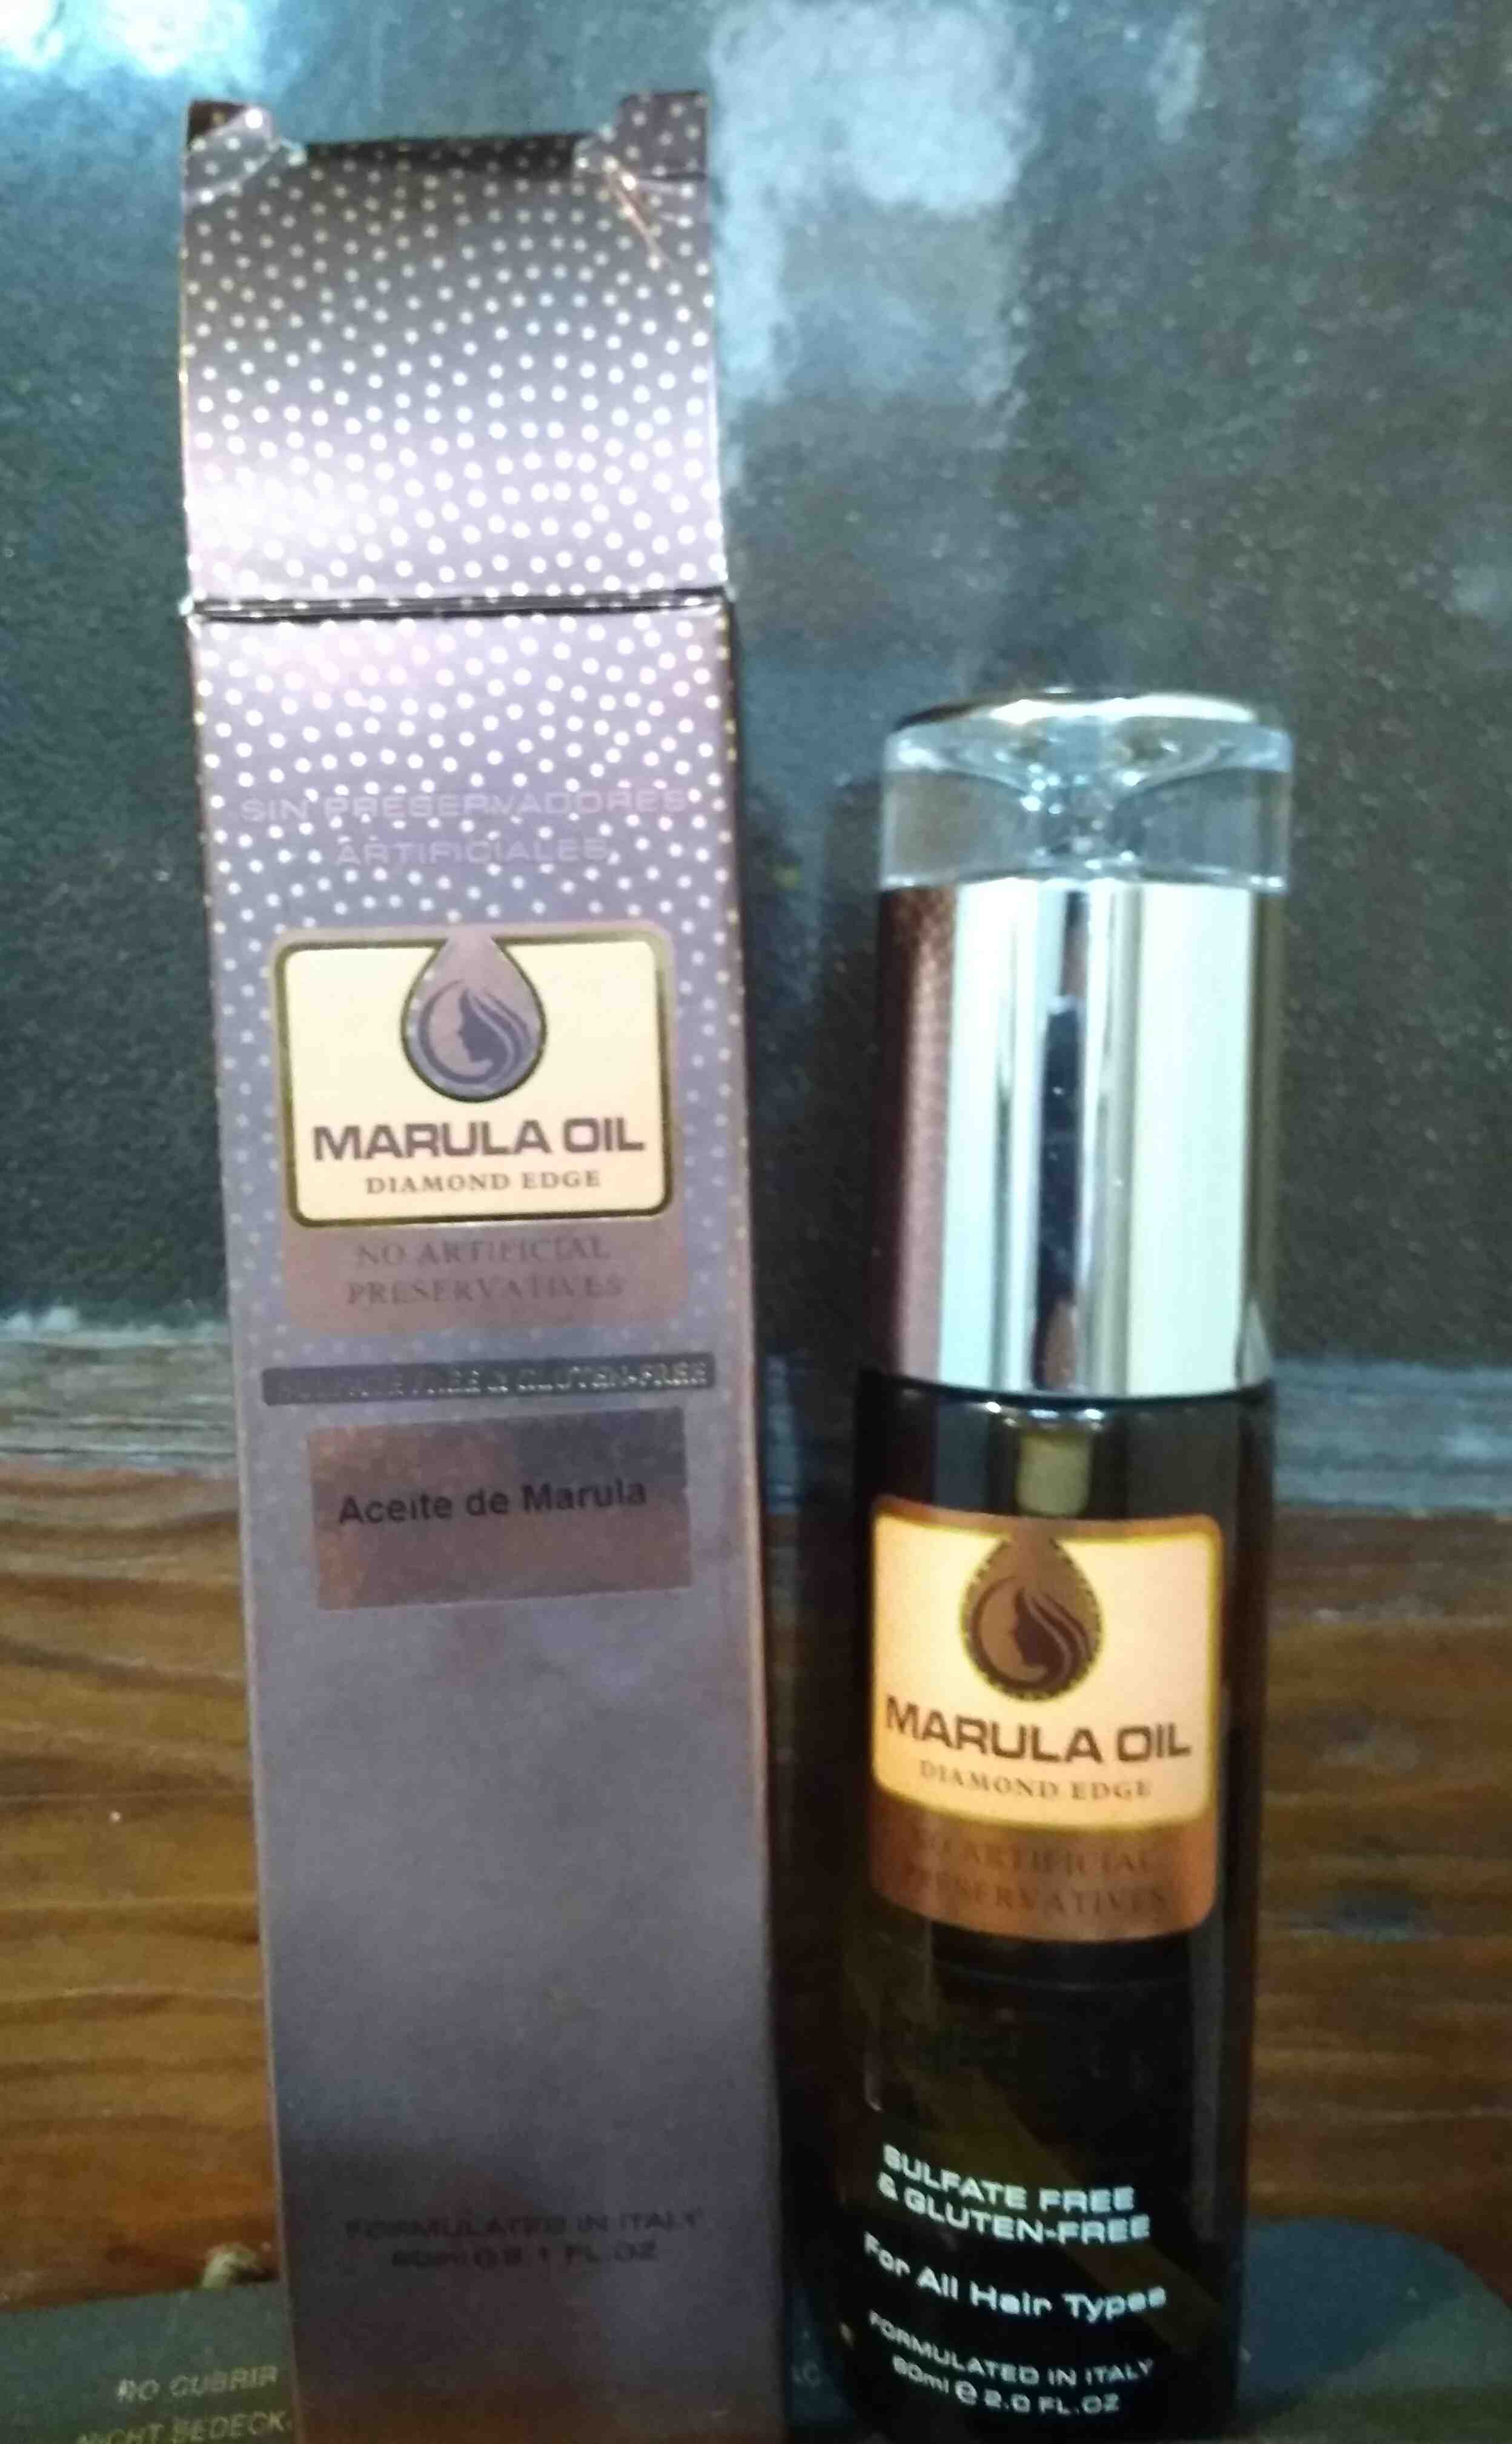 Marula oil diamond edge - Produkt - en